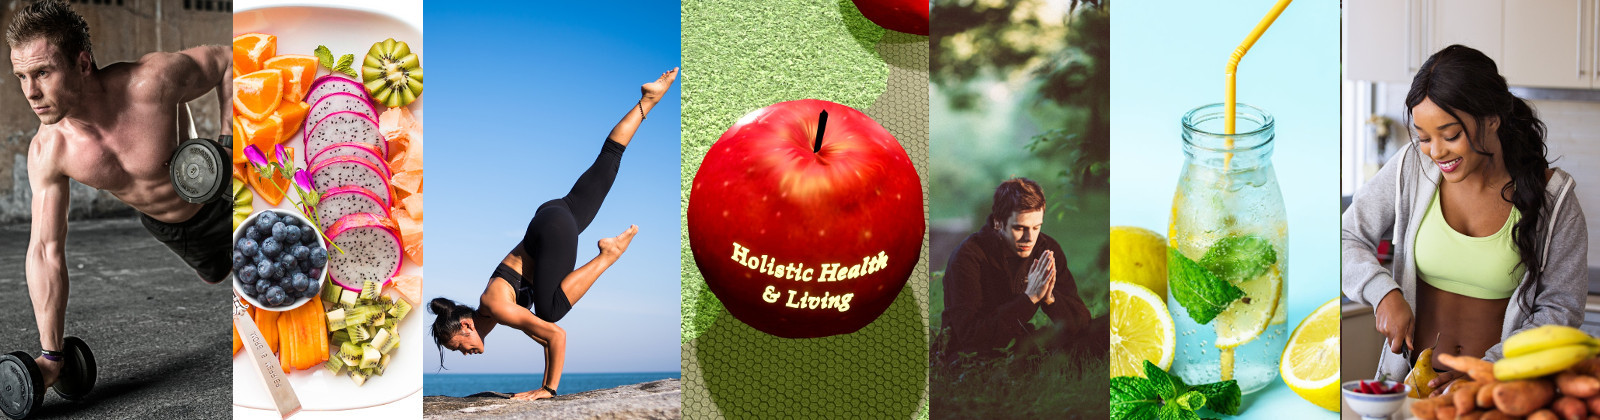 Holistic Health & Living Header